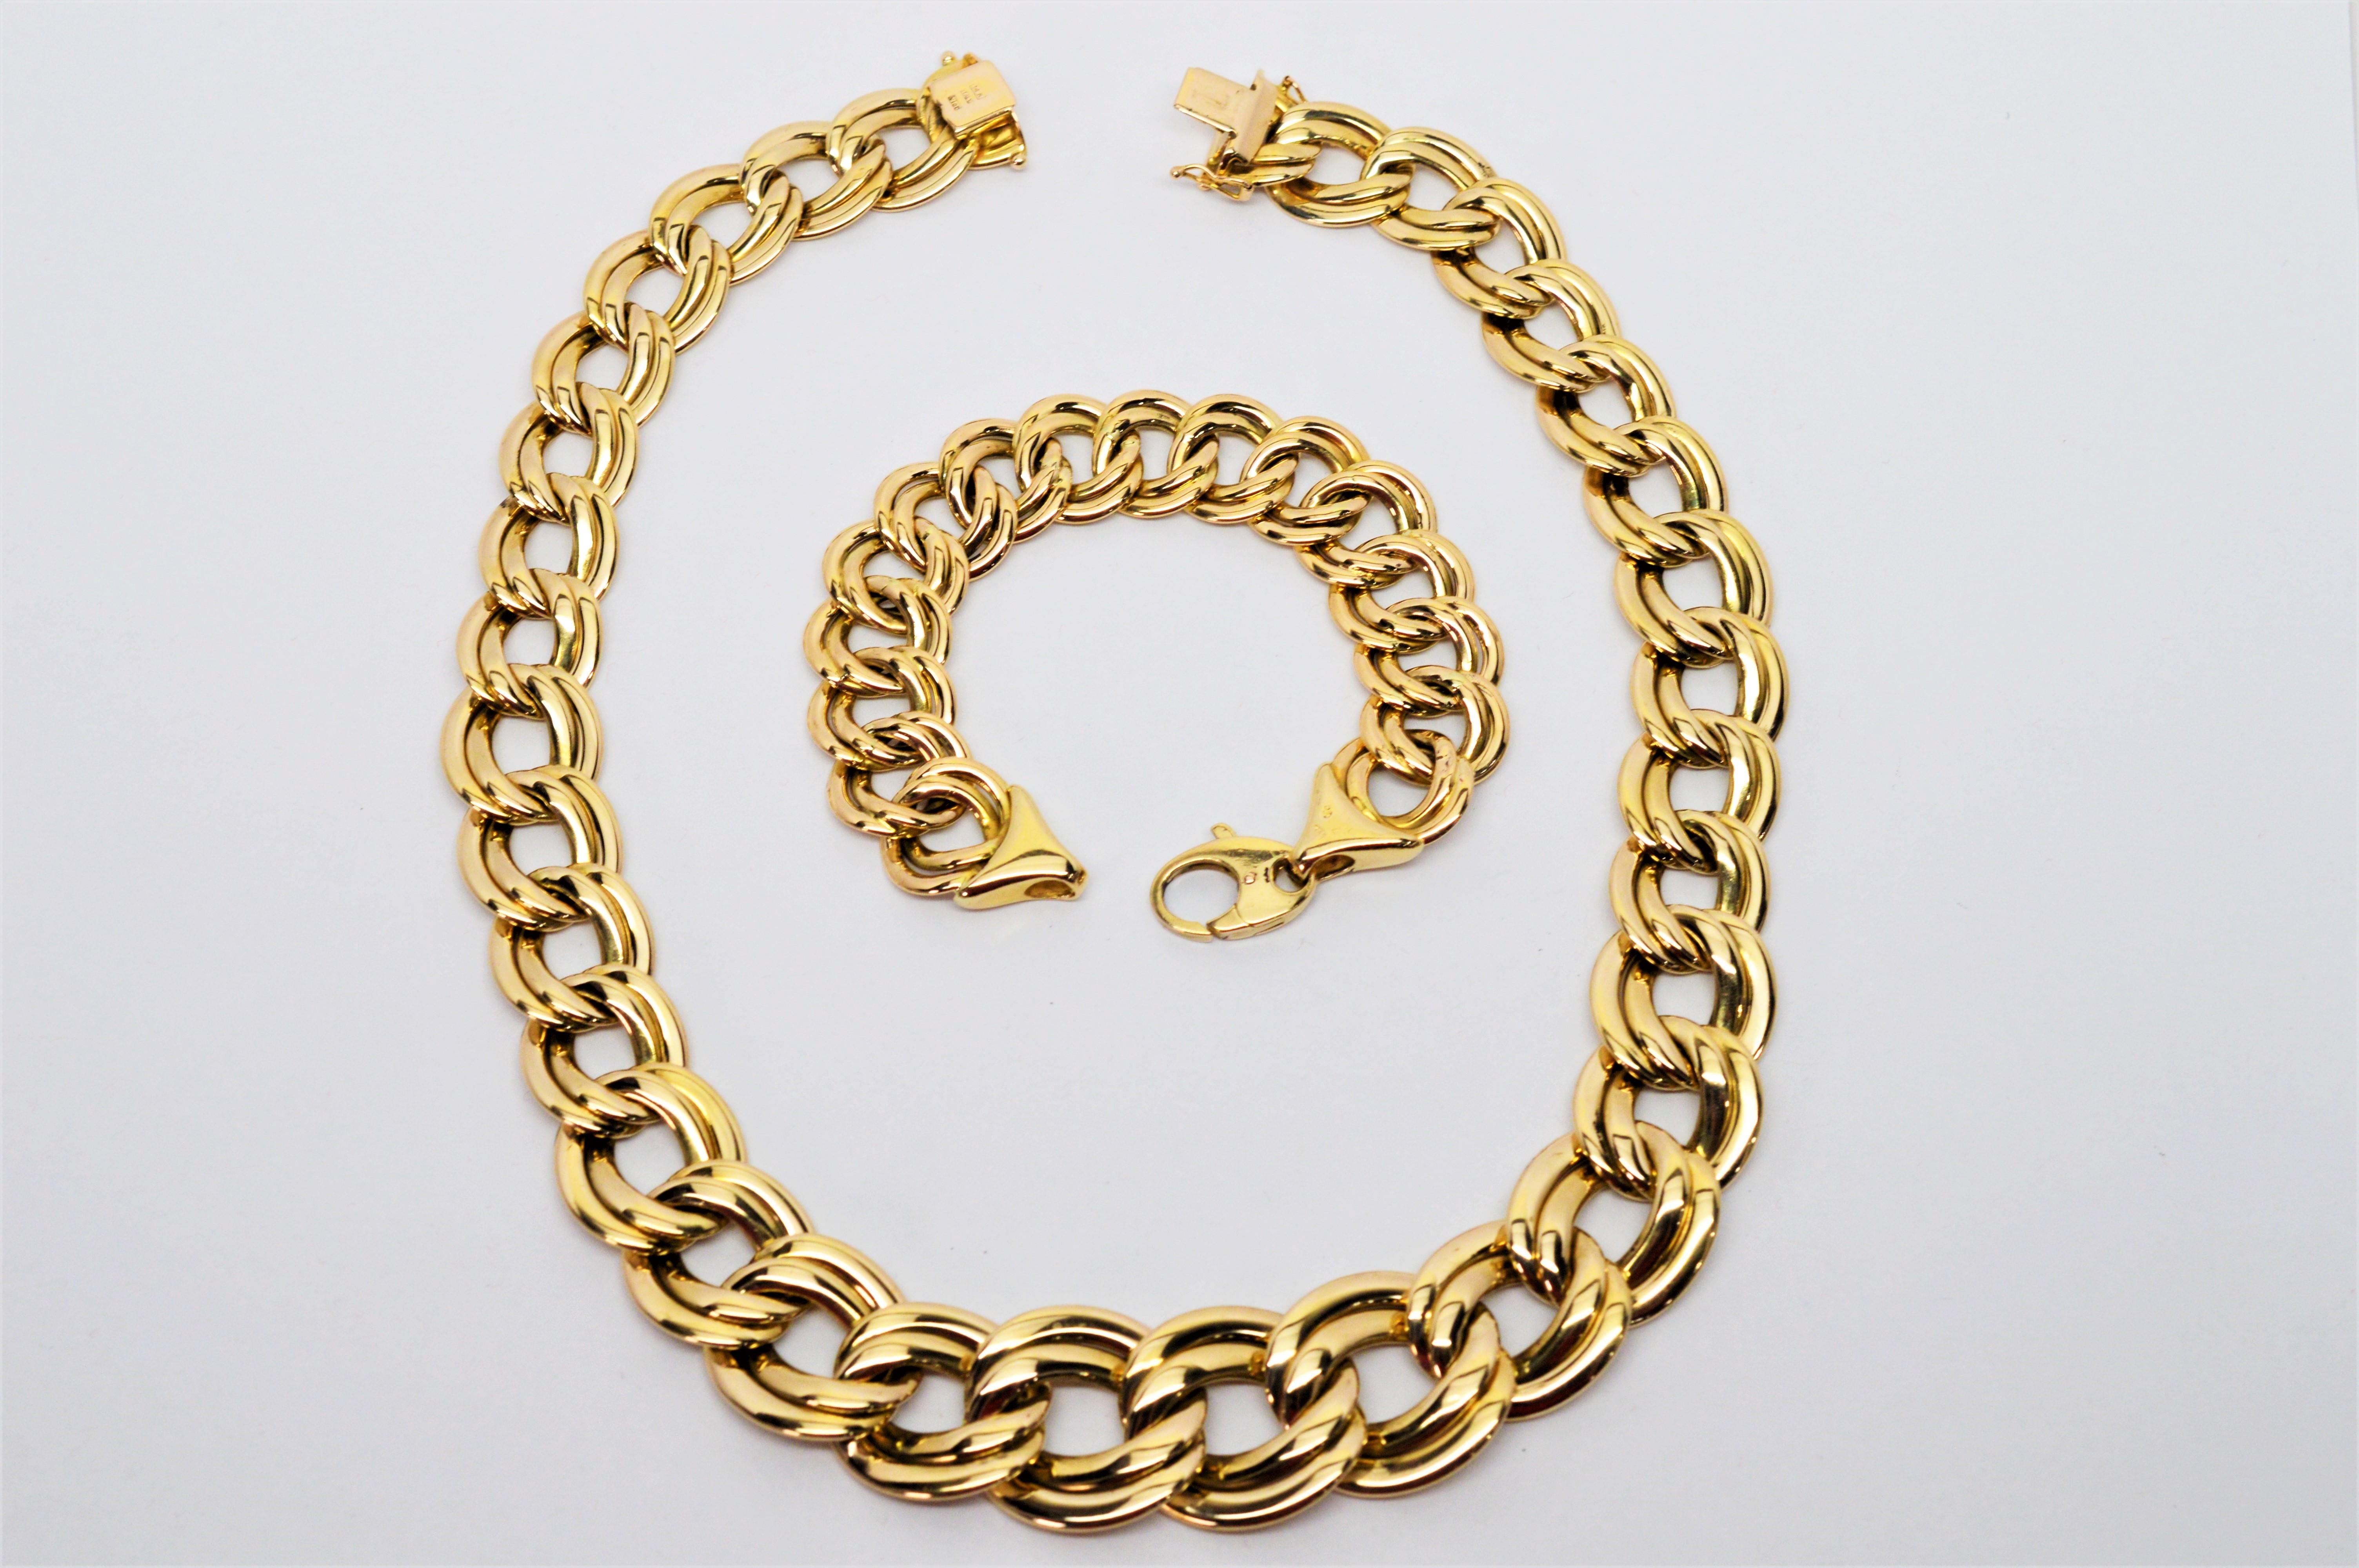 Women's Italian Double Link Chain 14 Karat Yellow Gold Necklace and Bracelet Set